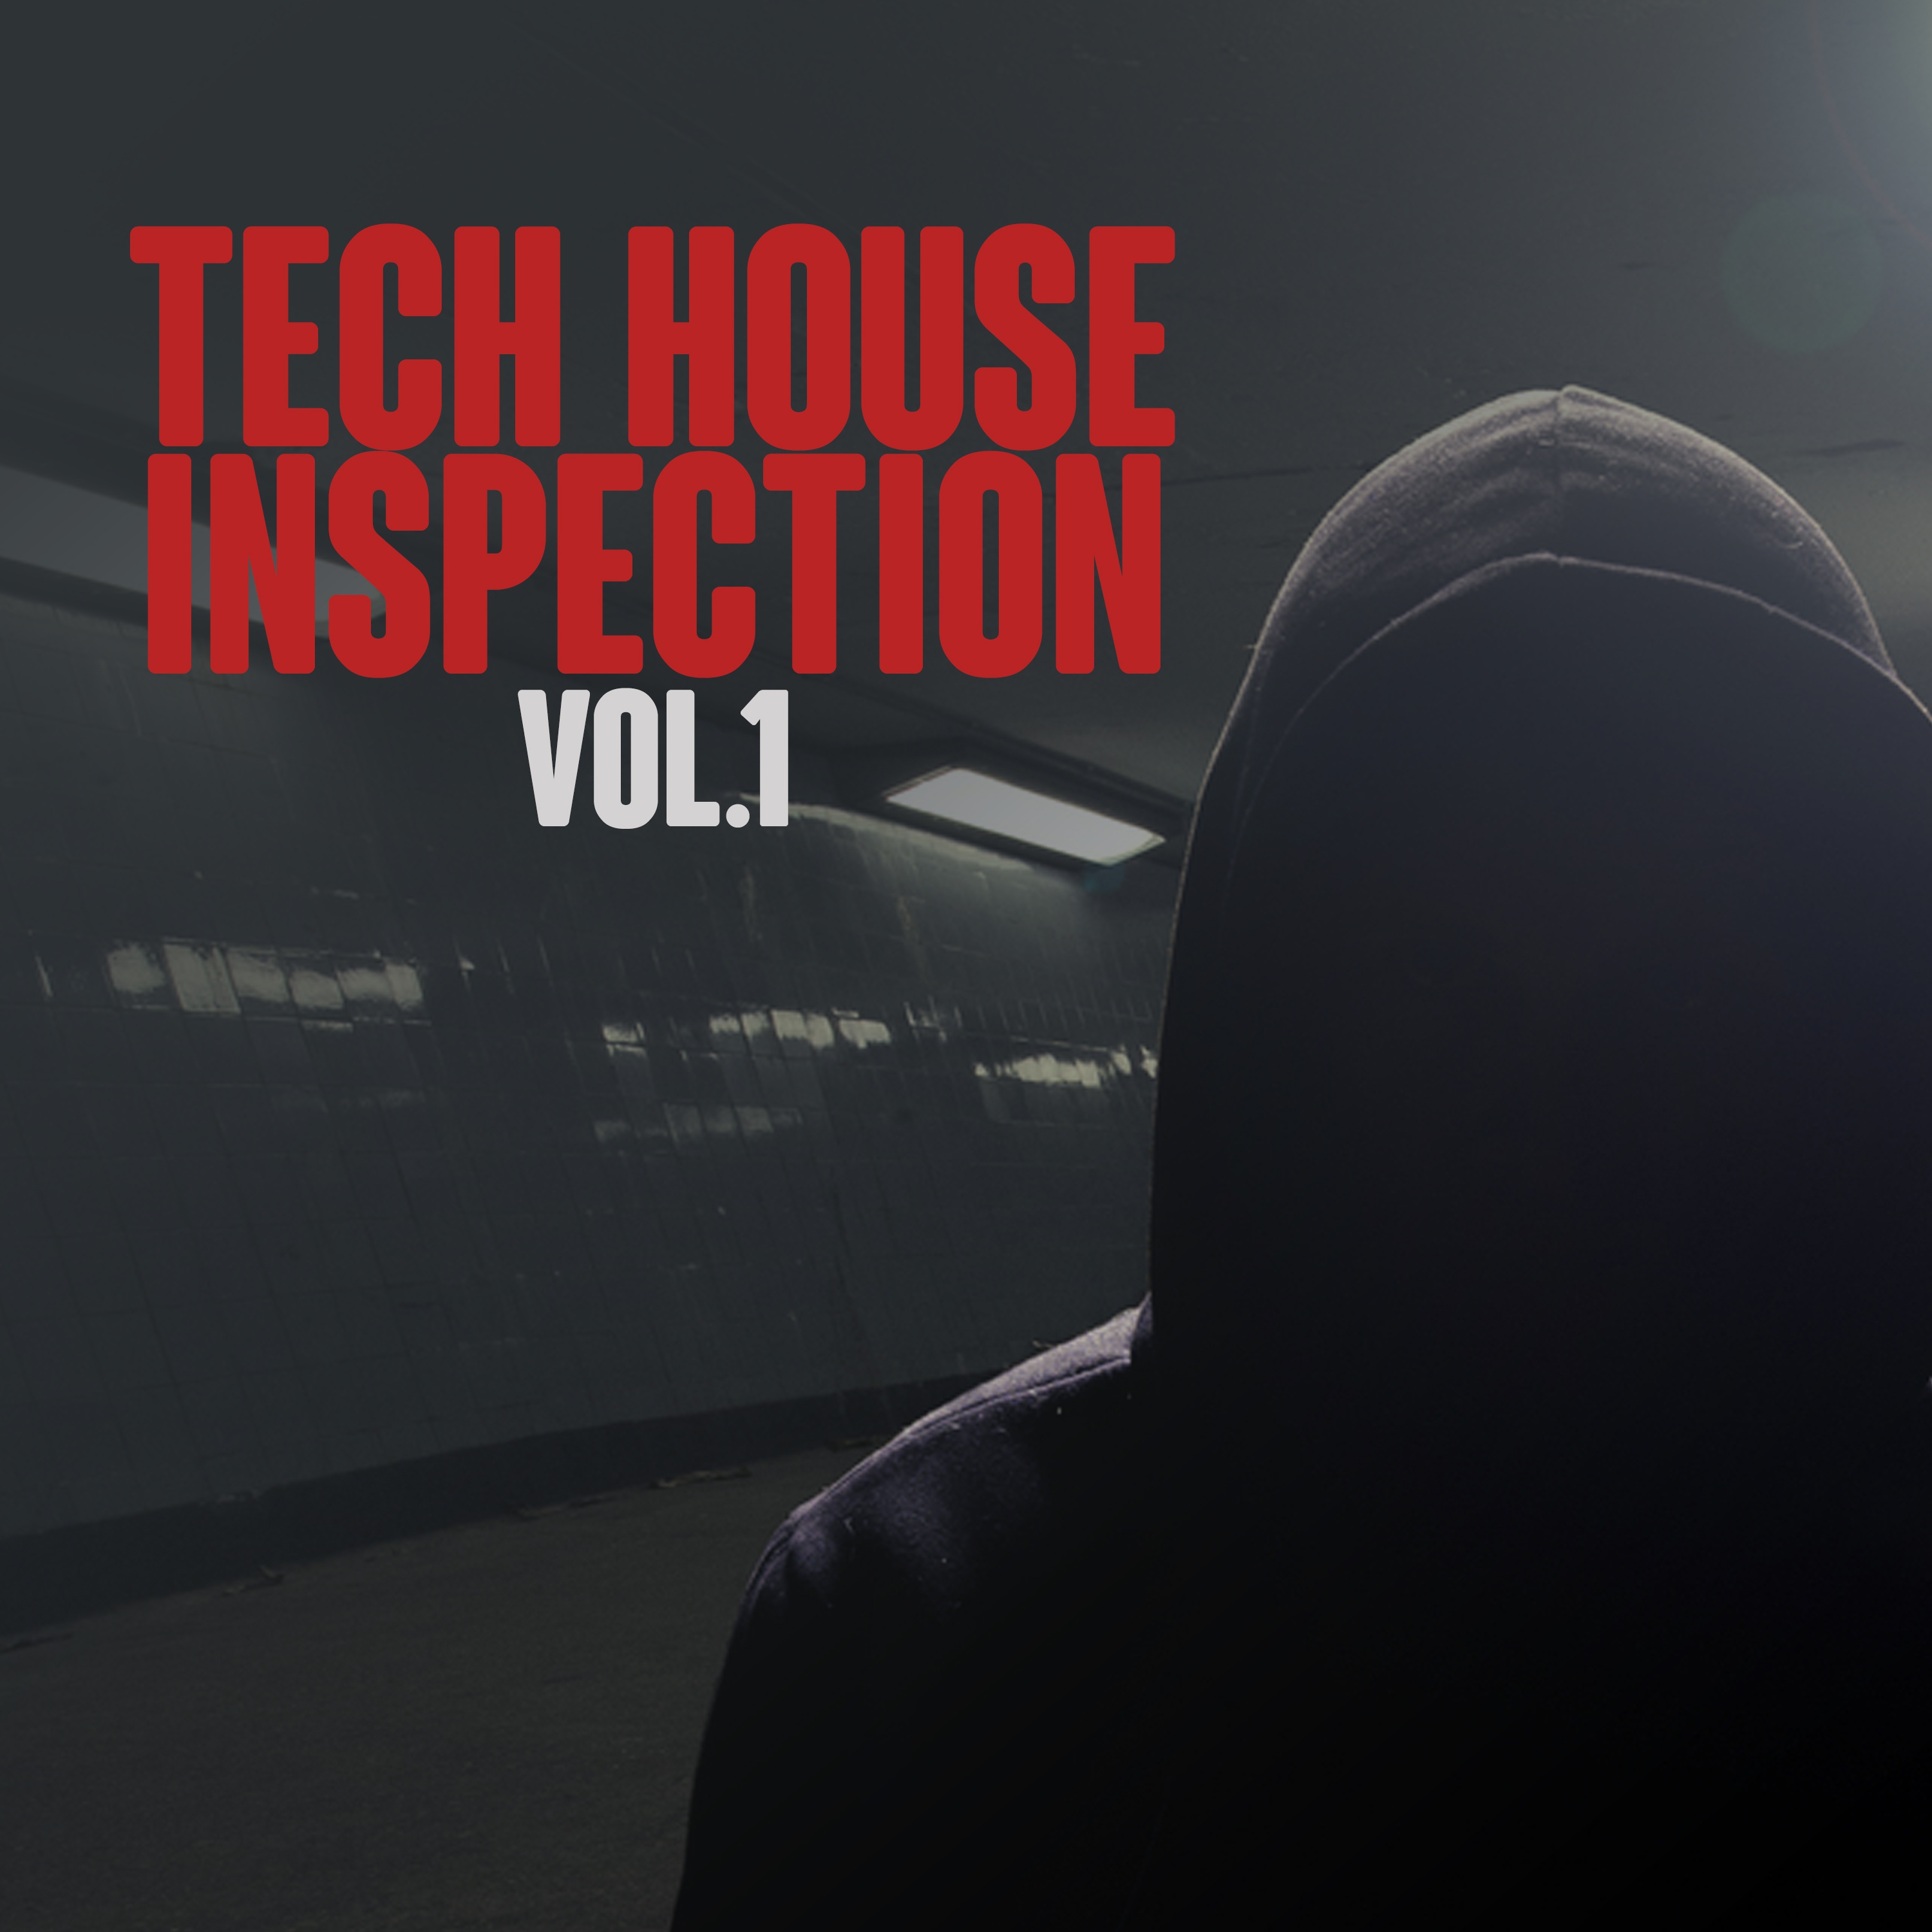 Tech House Inspection, Vol. 1